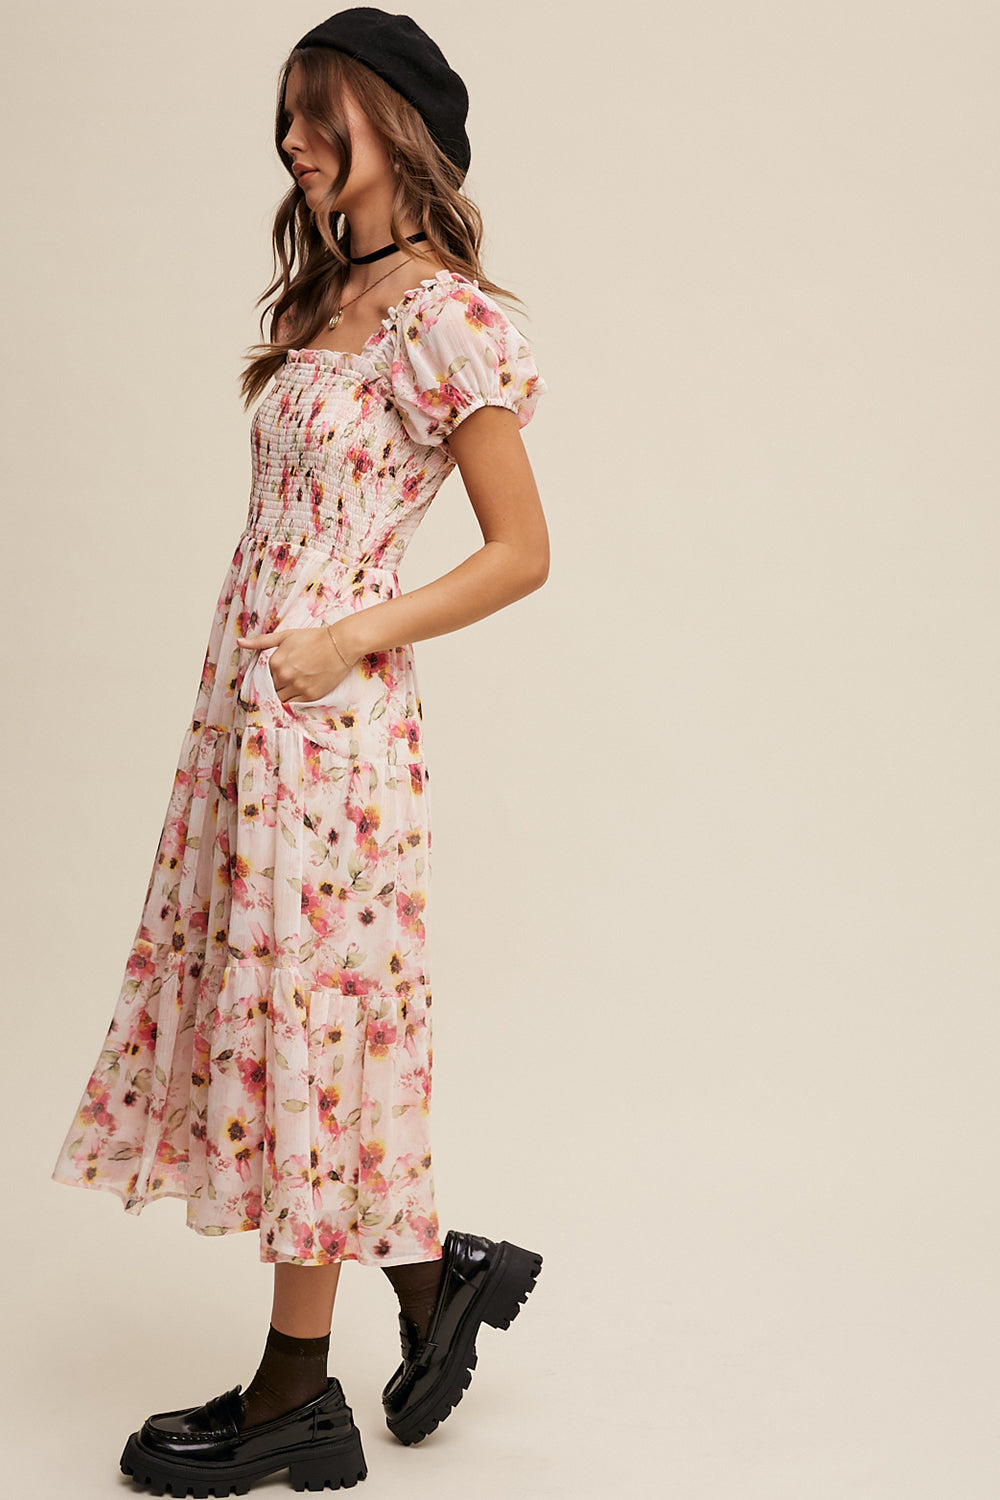 Blush Floral Smocked Midi Dress